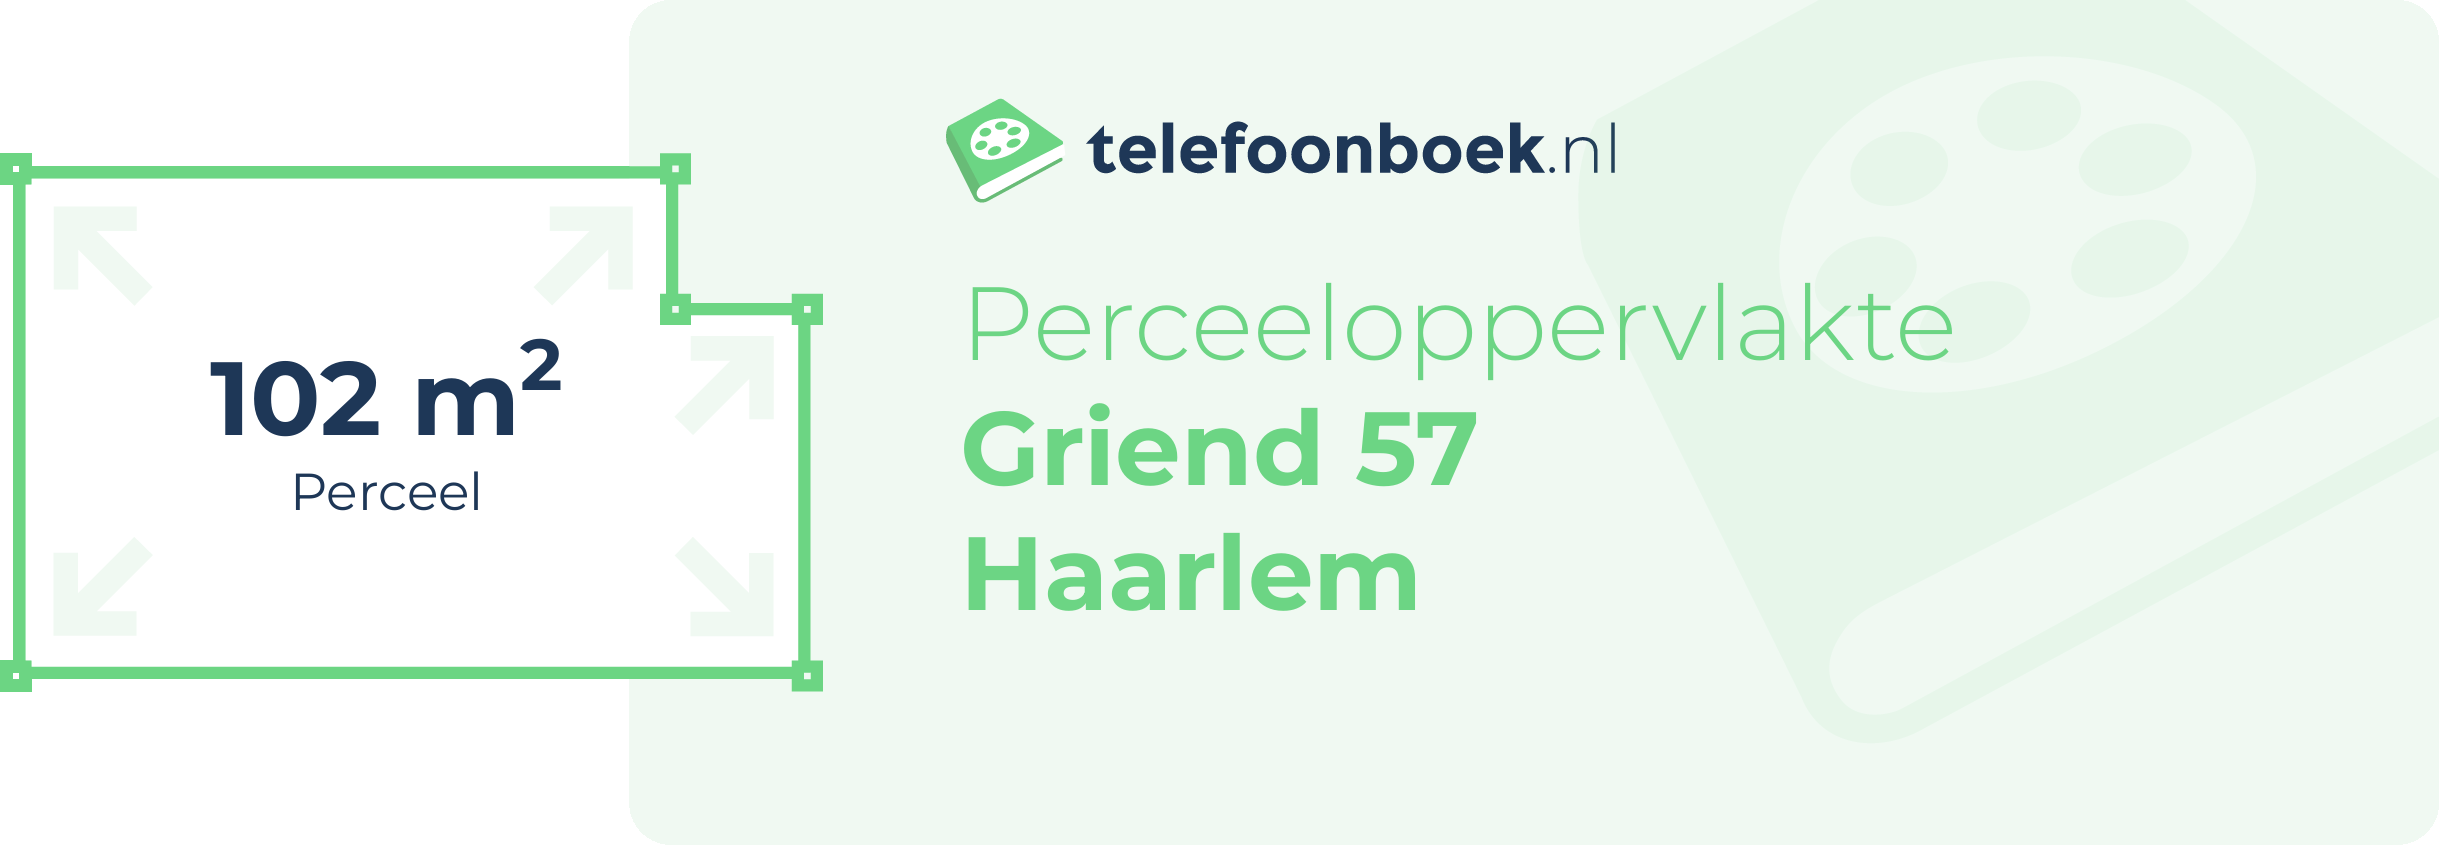 Perceeloppervlakte Griend 57 Haarlem